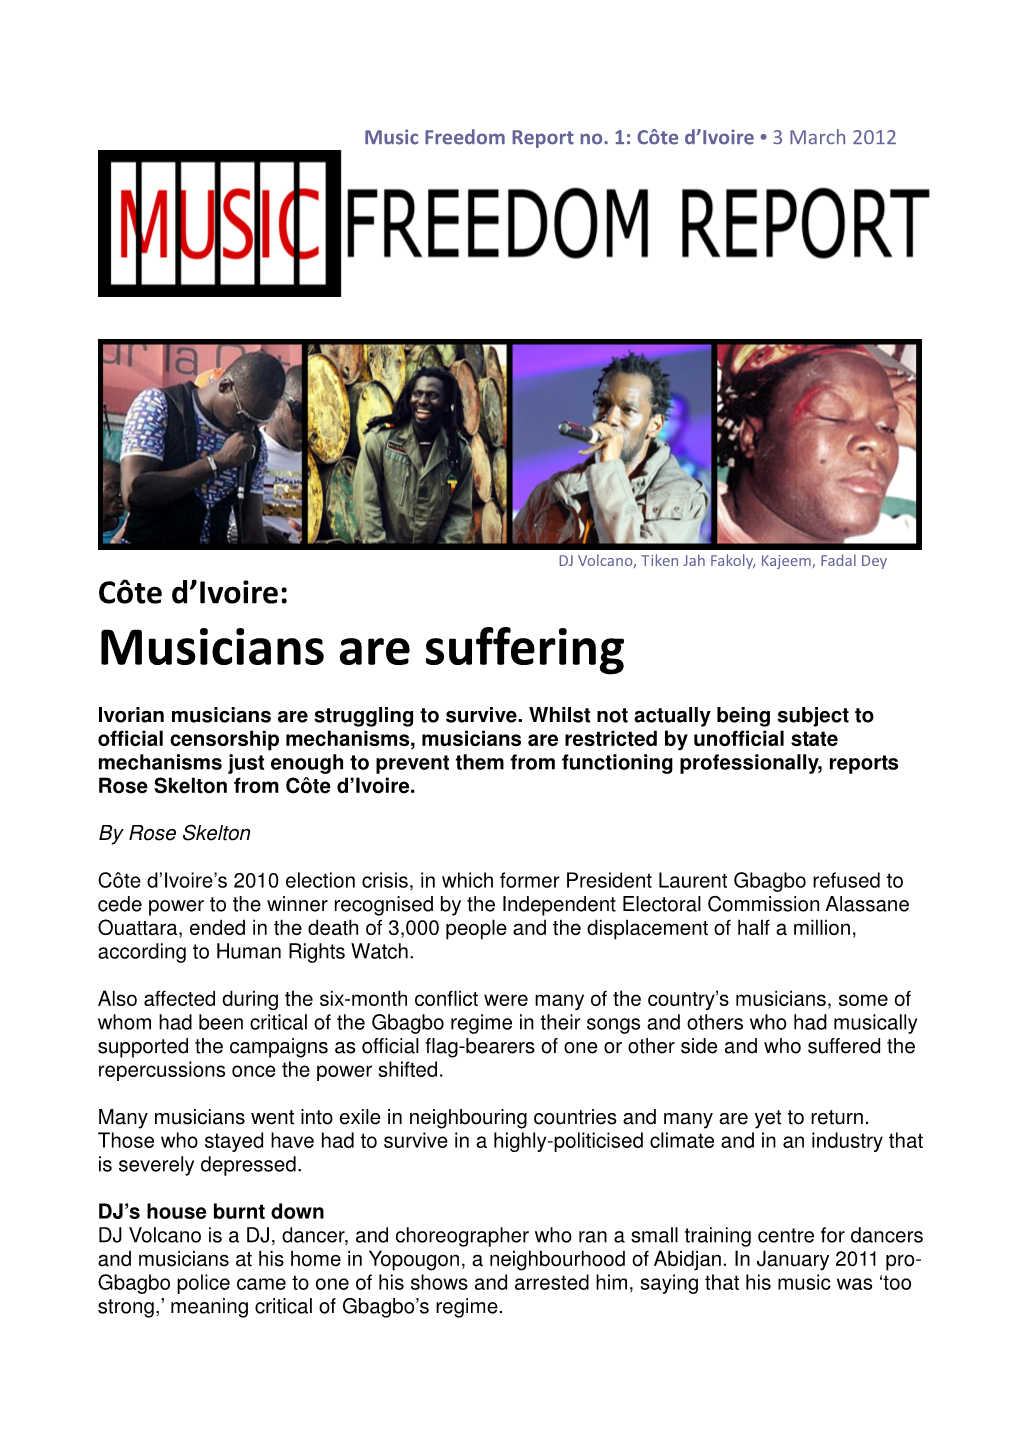 Musicians Are Suffering